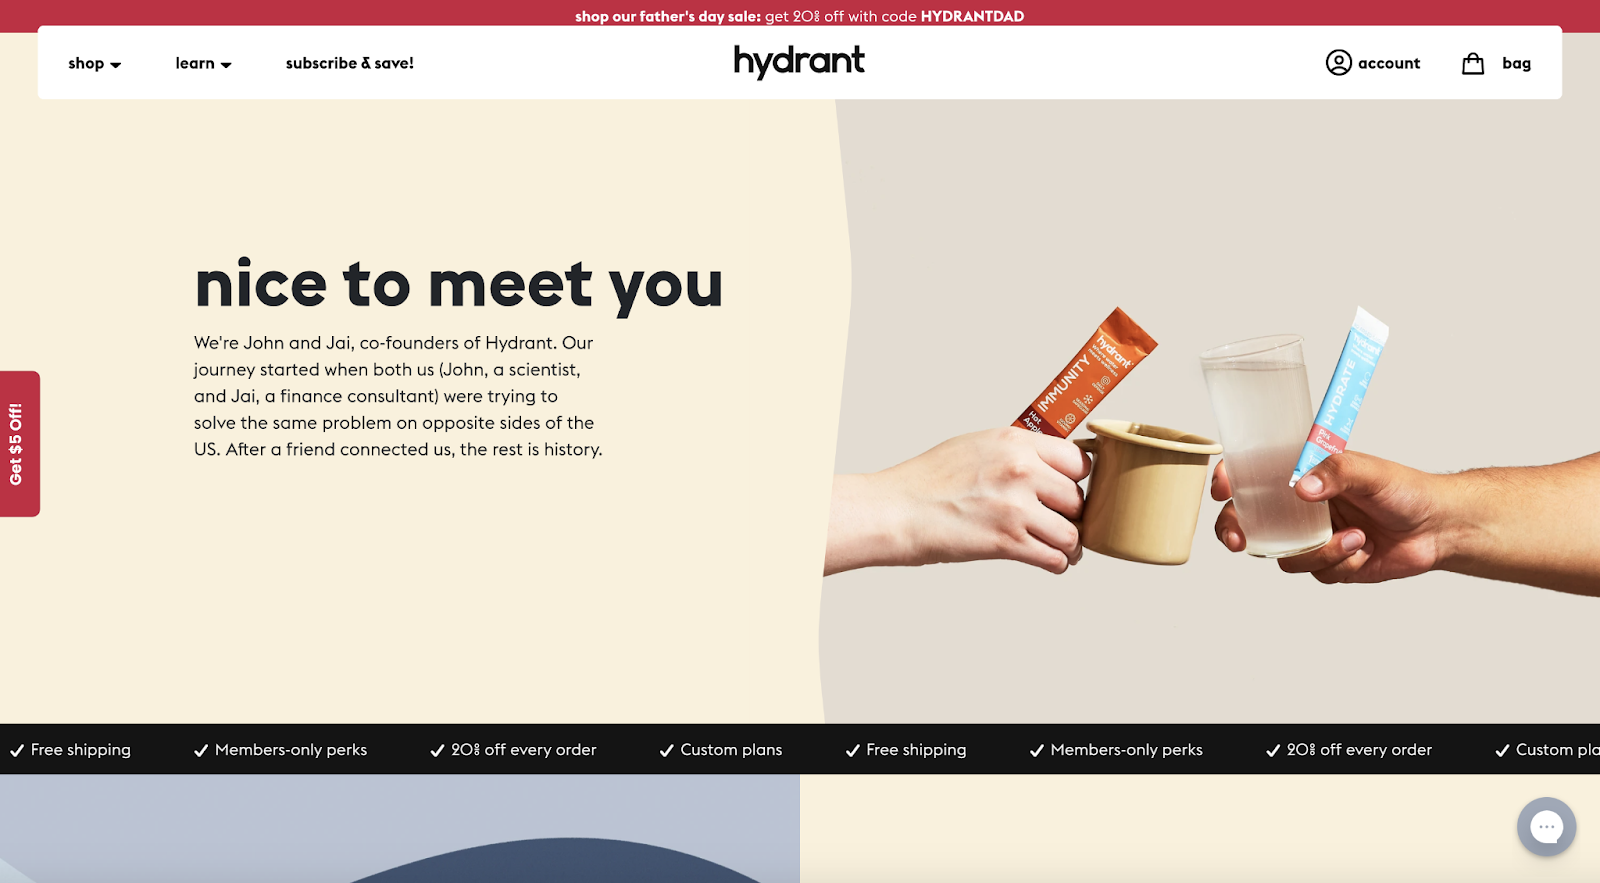 Hydrant 的独特品牌在其“关于我们”页面上熠熠生辉。